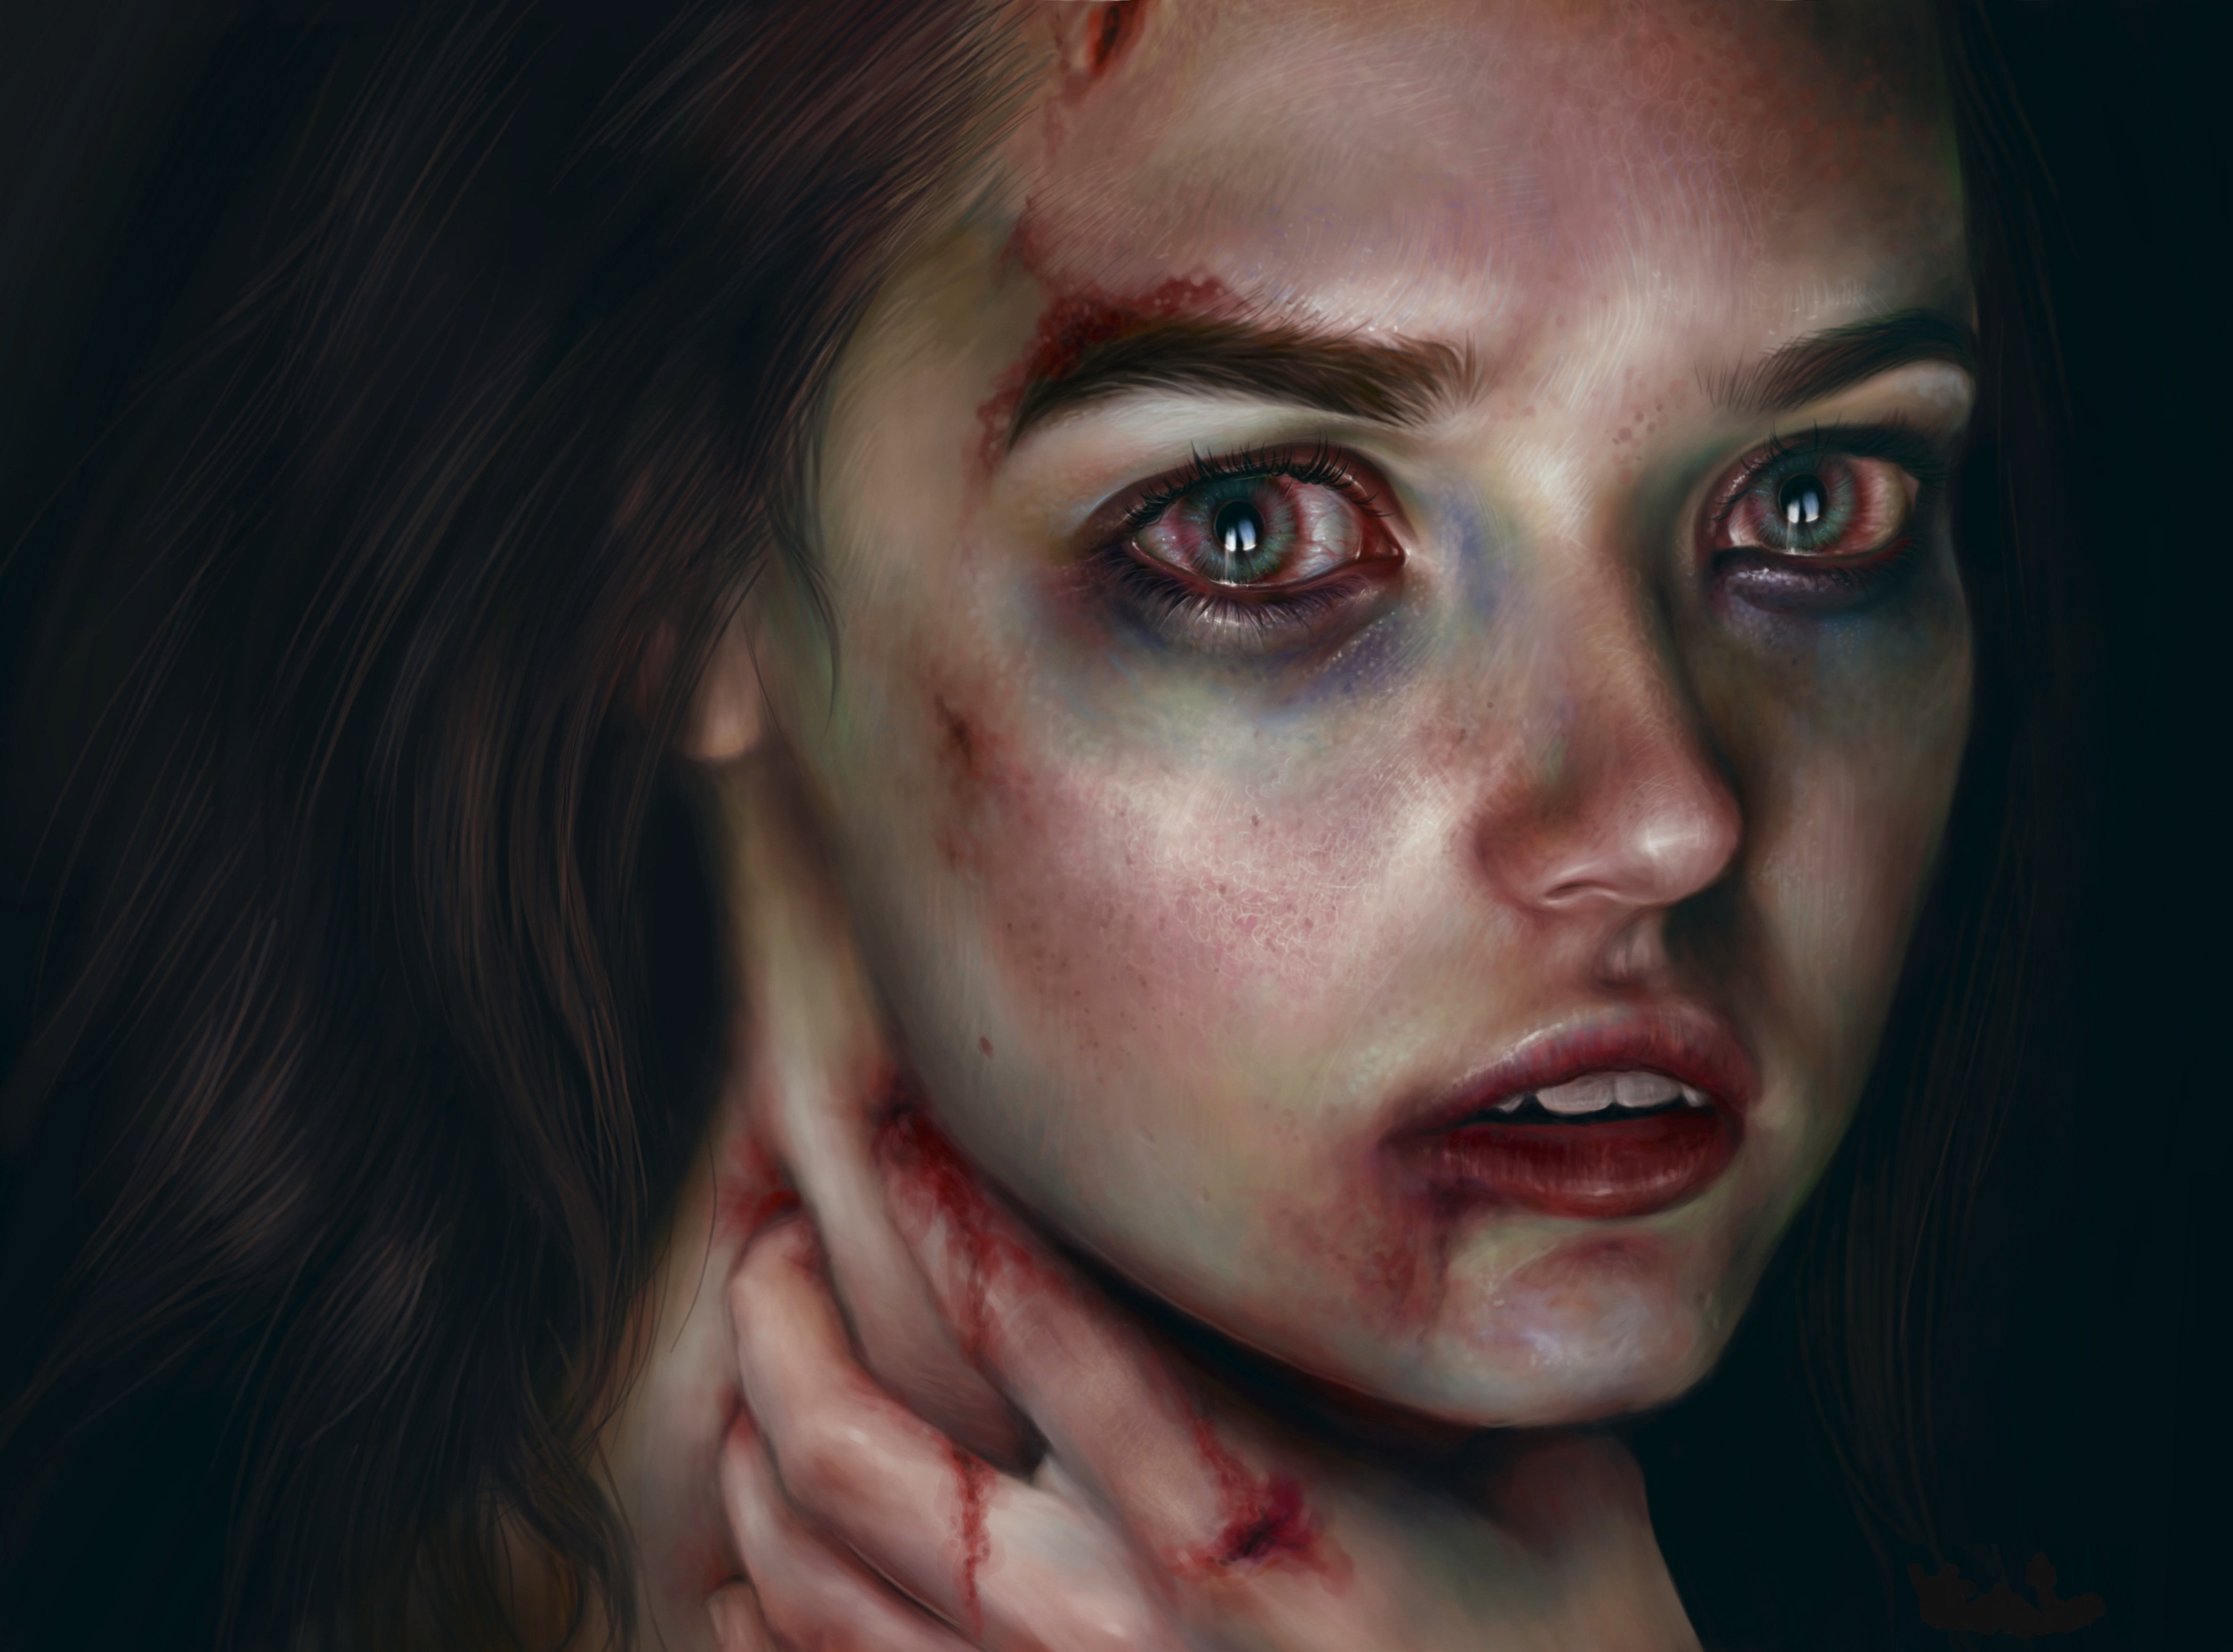 Injured Girl by Elena Sai